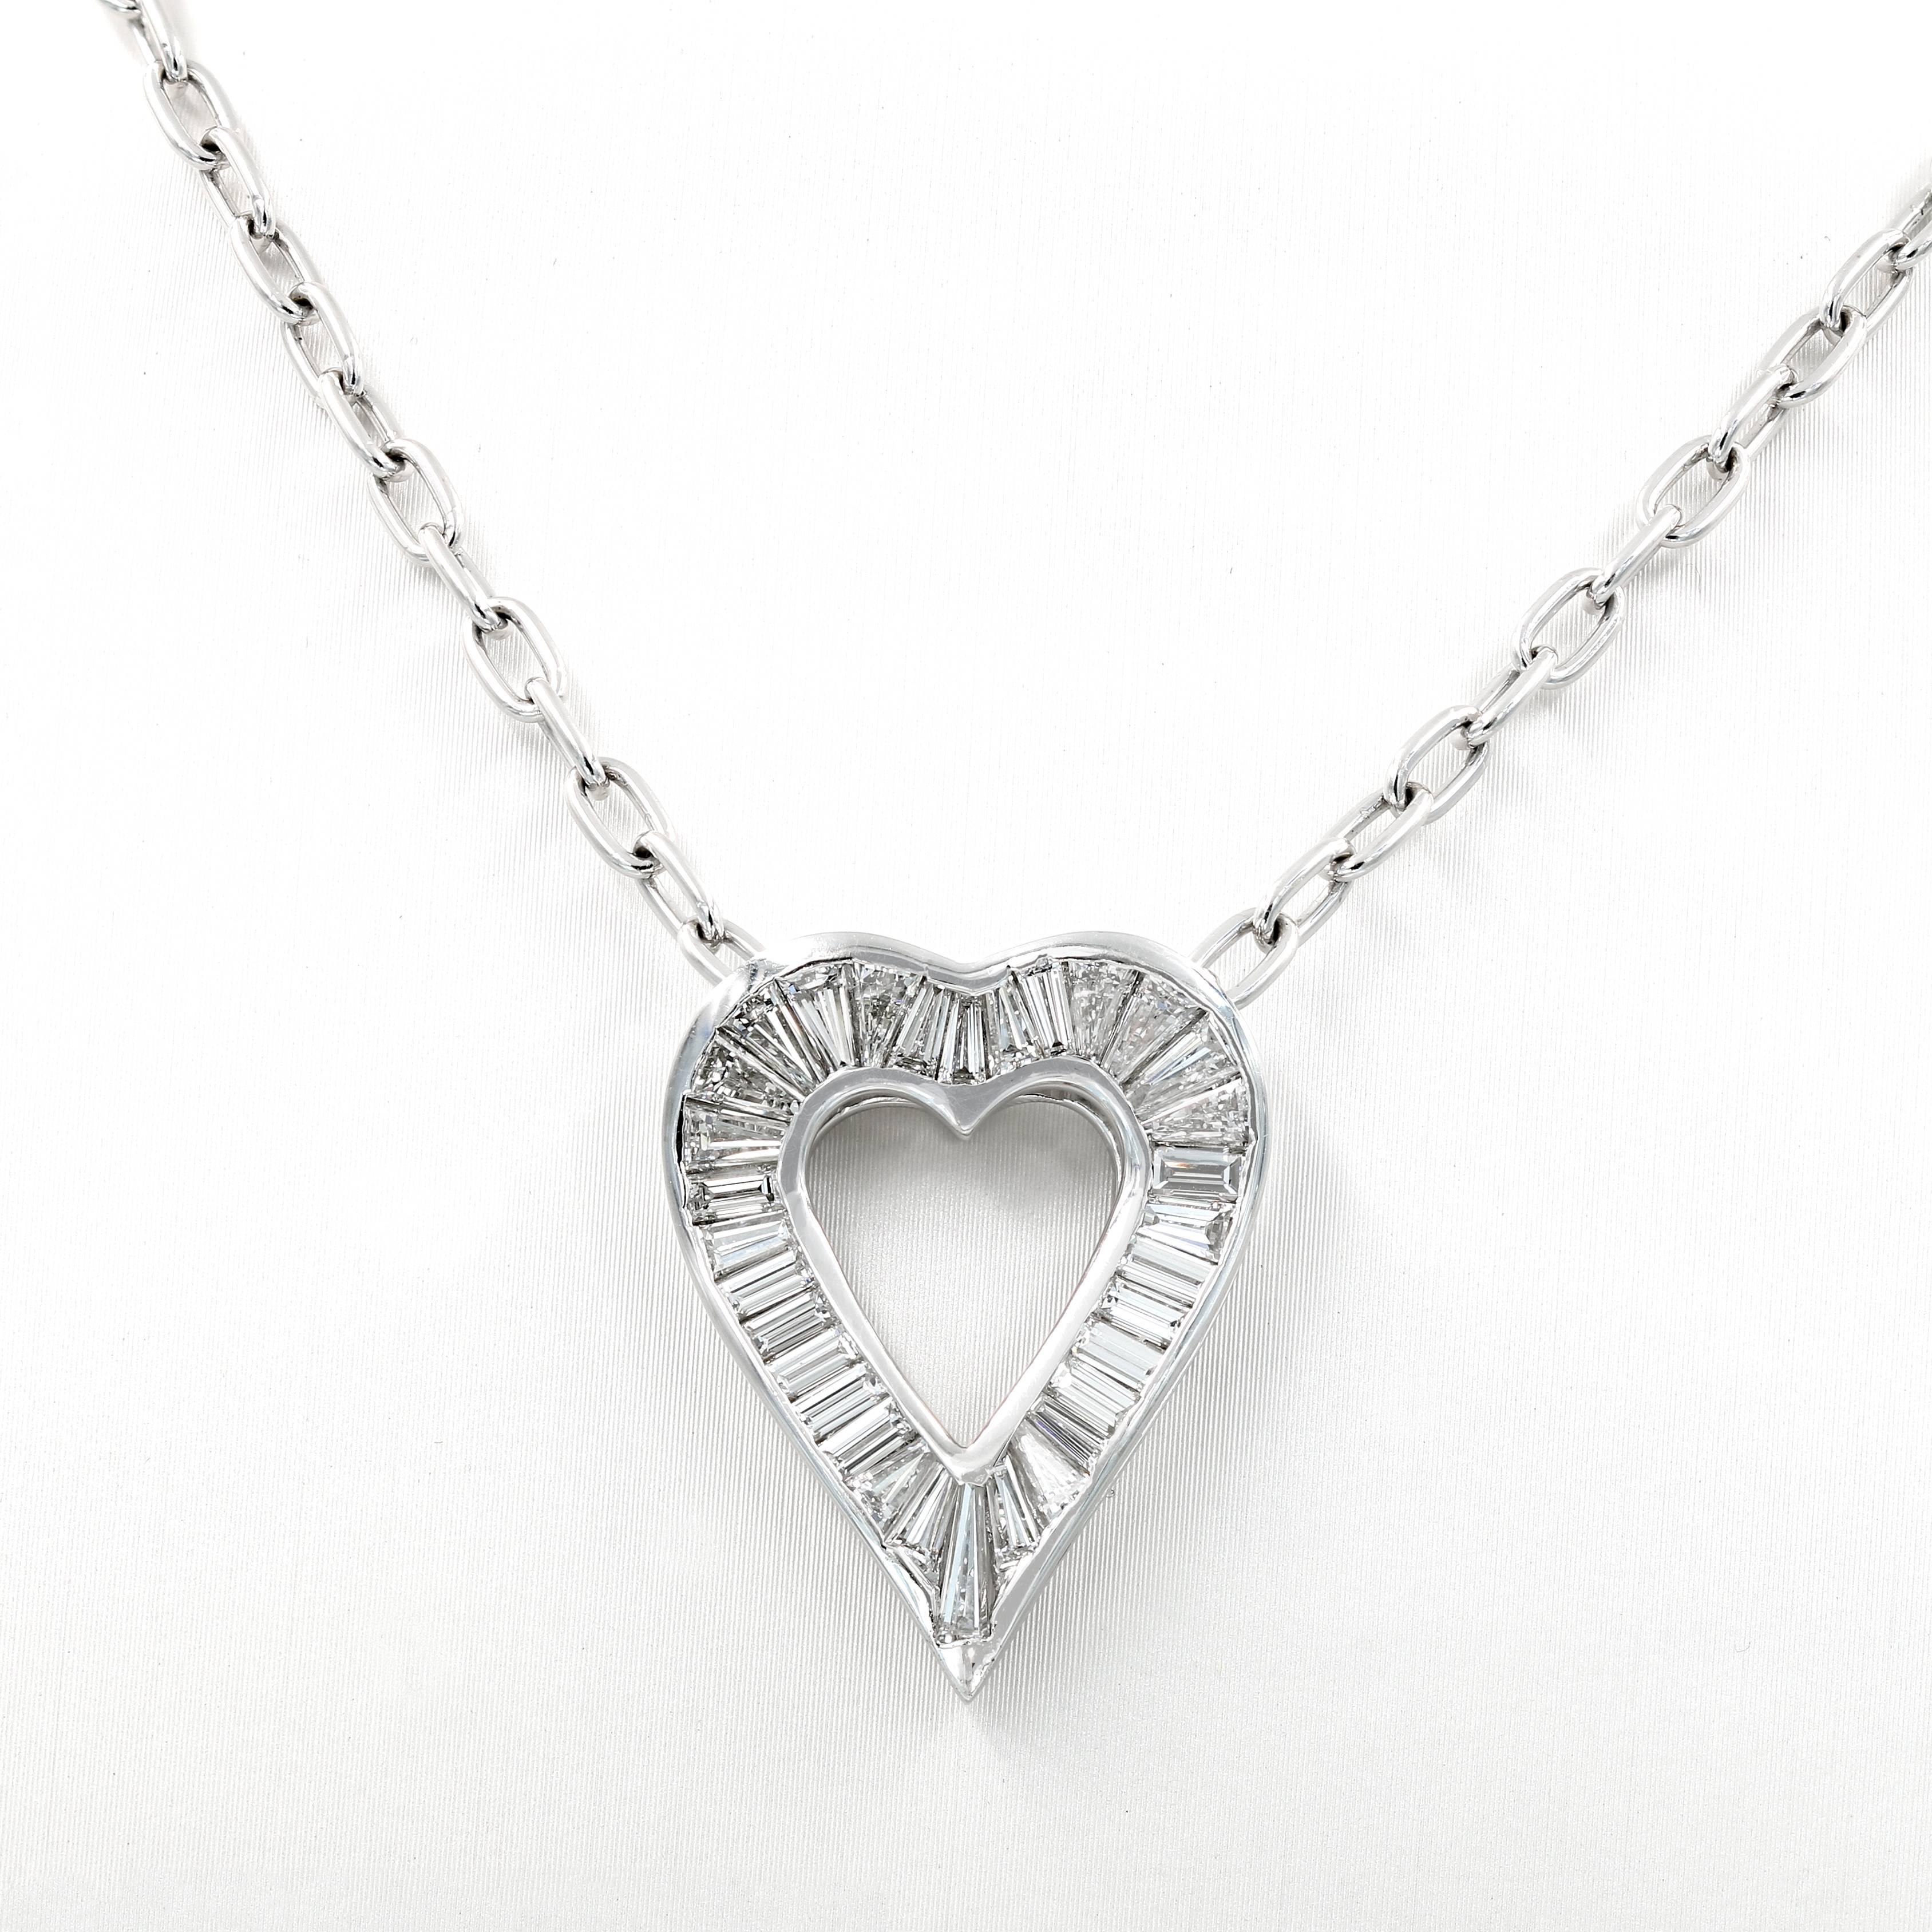 Contemporary Lester Lampert Signature Large Baguette Diamond Heart Necklace